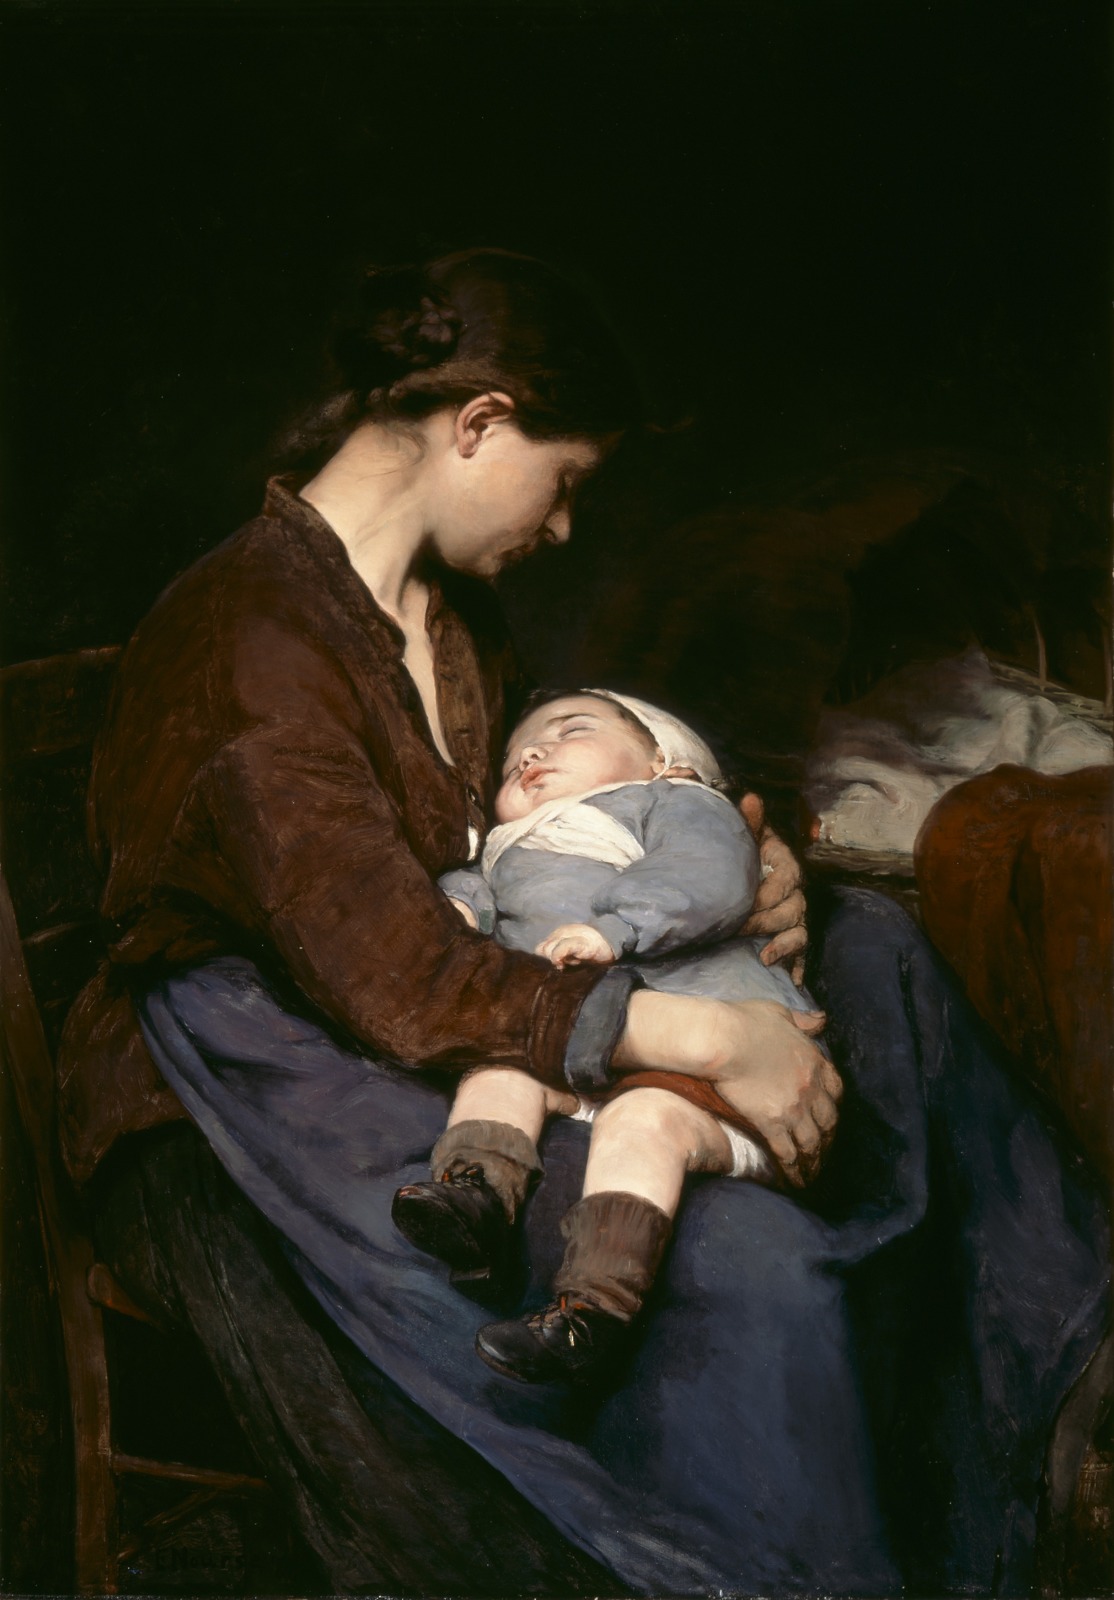 A Mother by Elizabeth Nourse - 1888 - 115.6 x 81.3 cm Cincinnati Art Museum